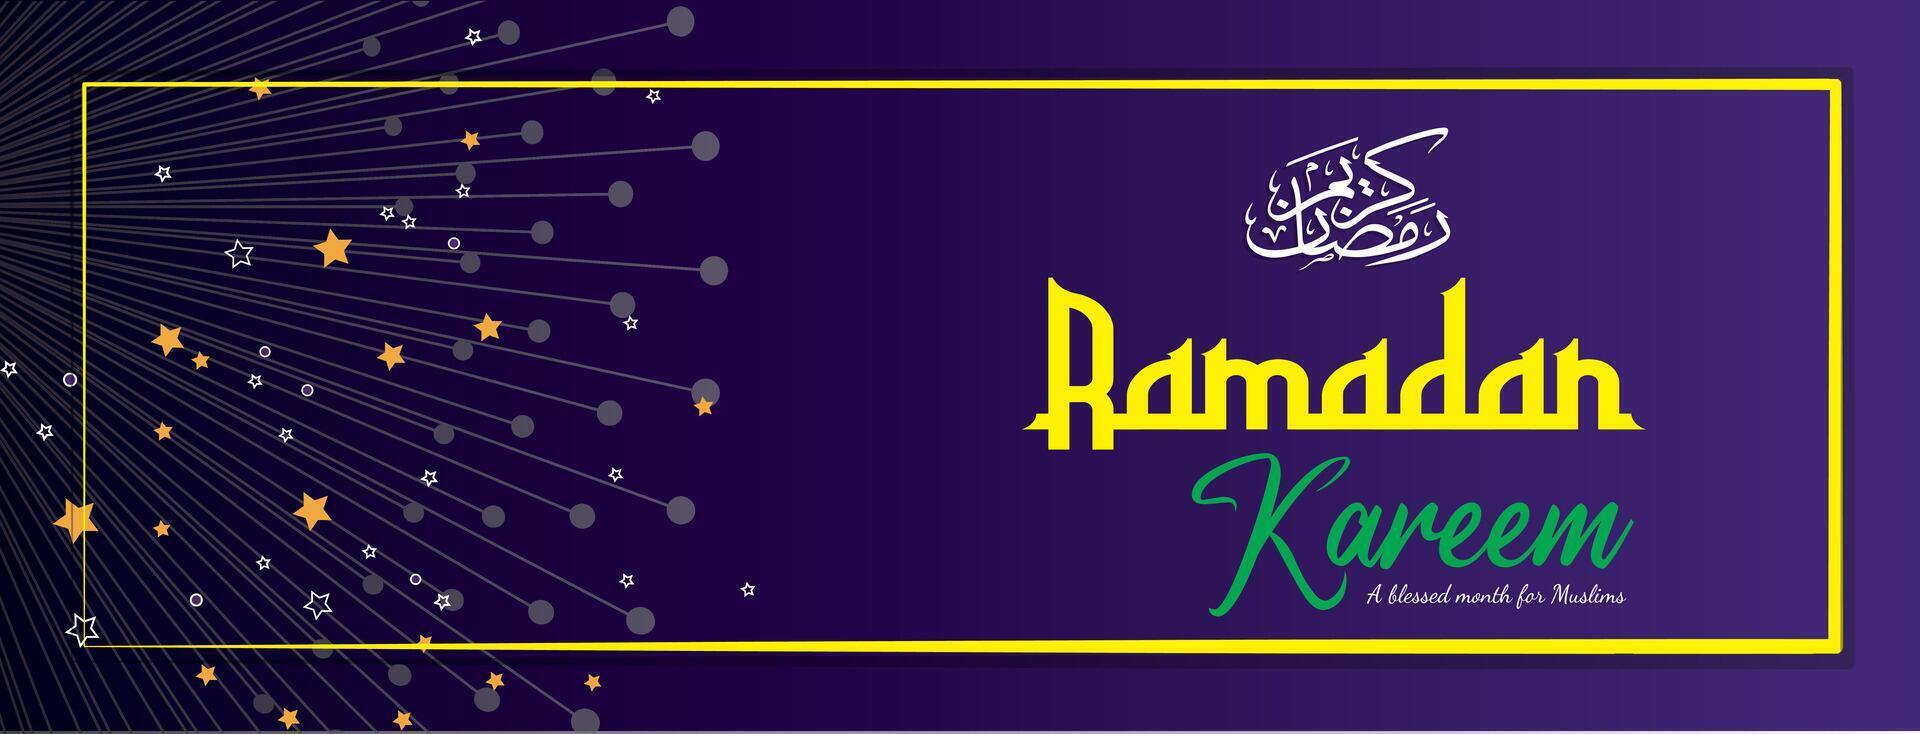 Ramadan kareem islamisch Festival Gruß Banner mit lila Farbe Hintergrund vektor